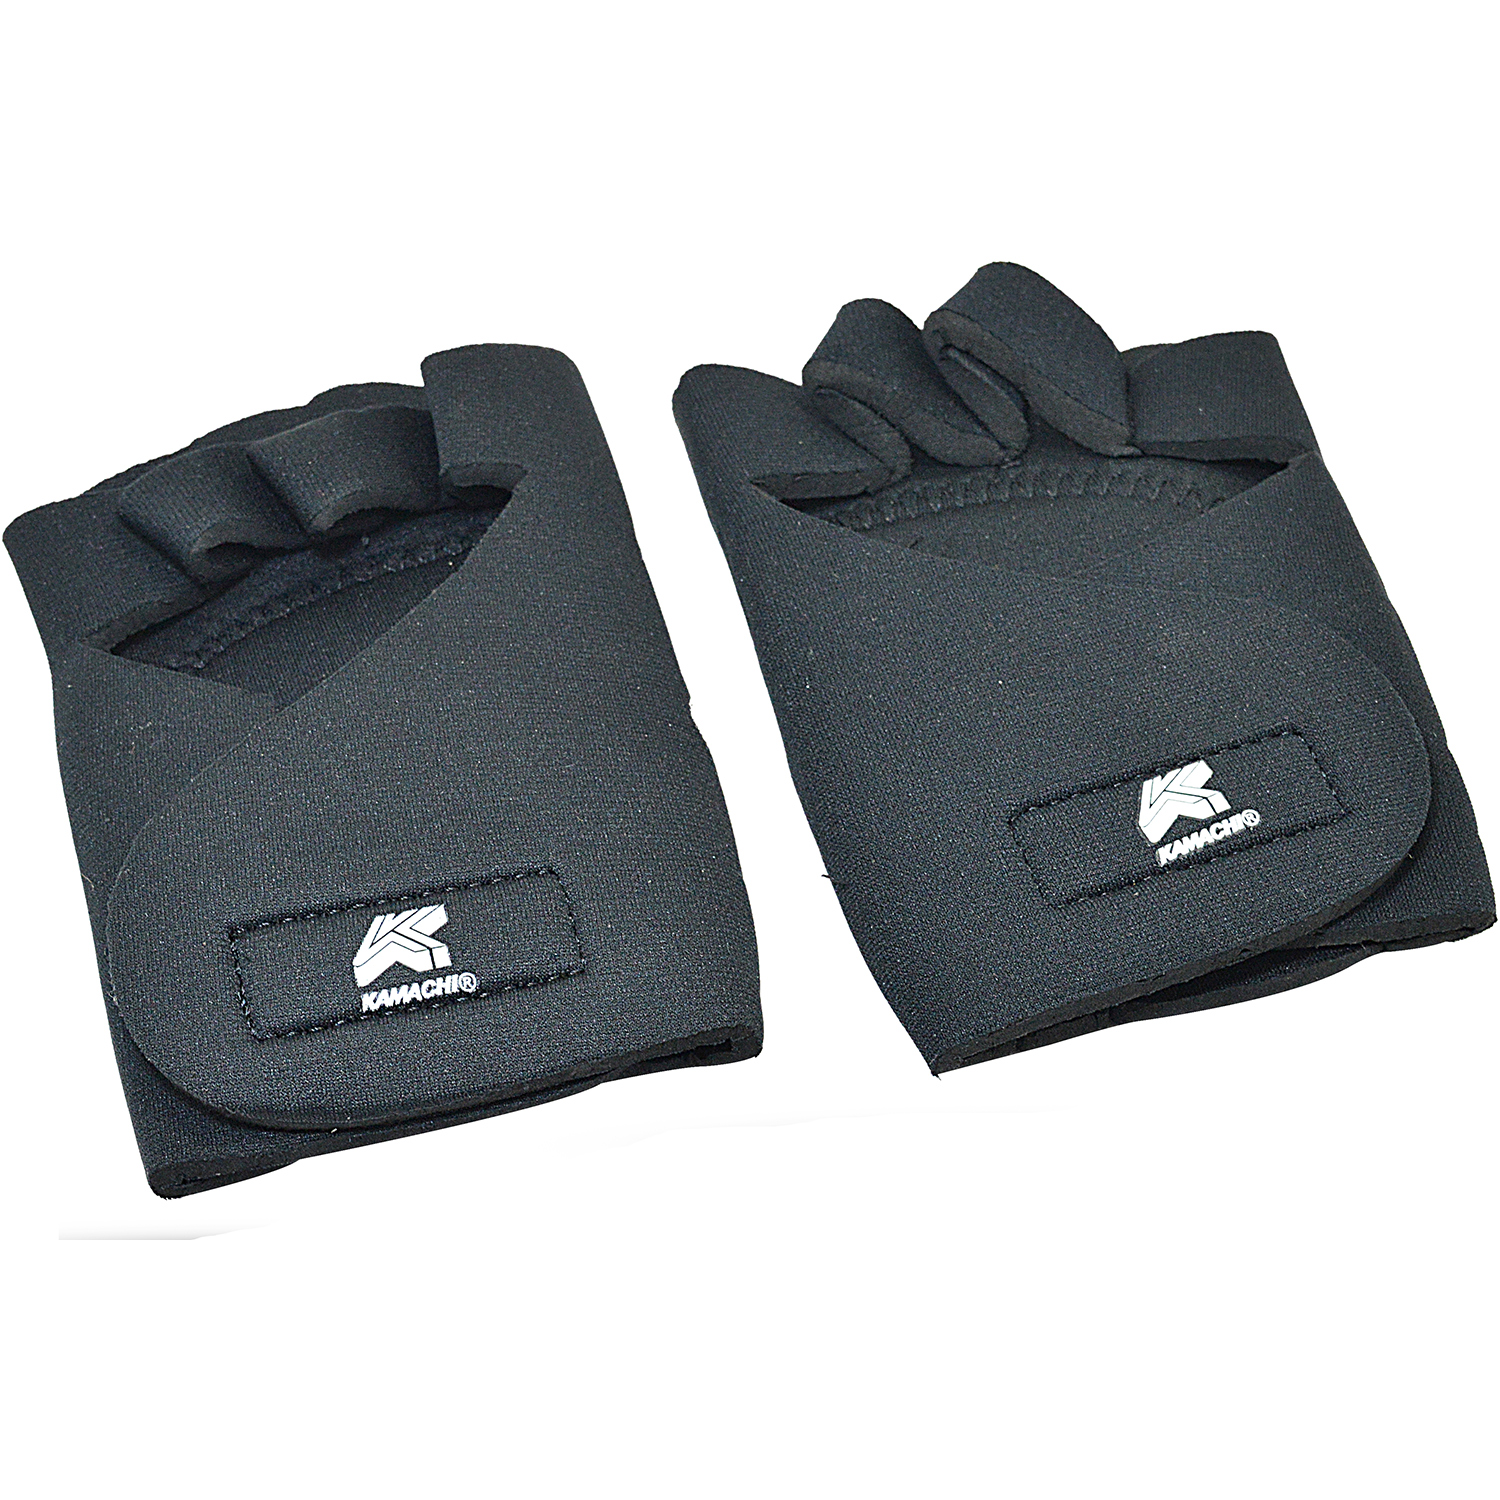 Kamachi Hand Gloves - Black - 4 mm